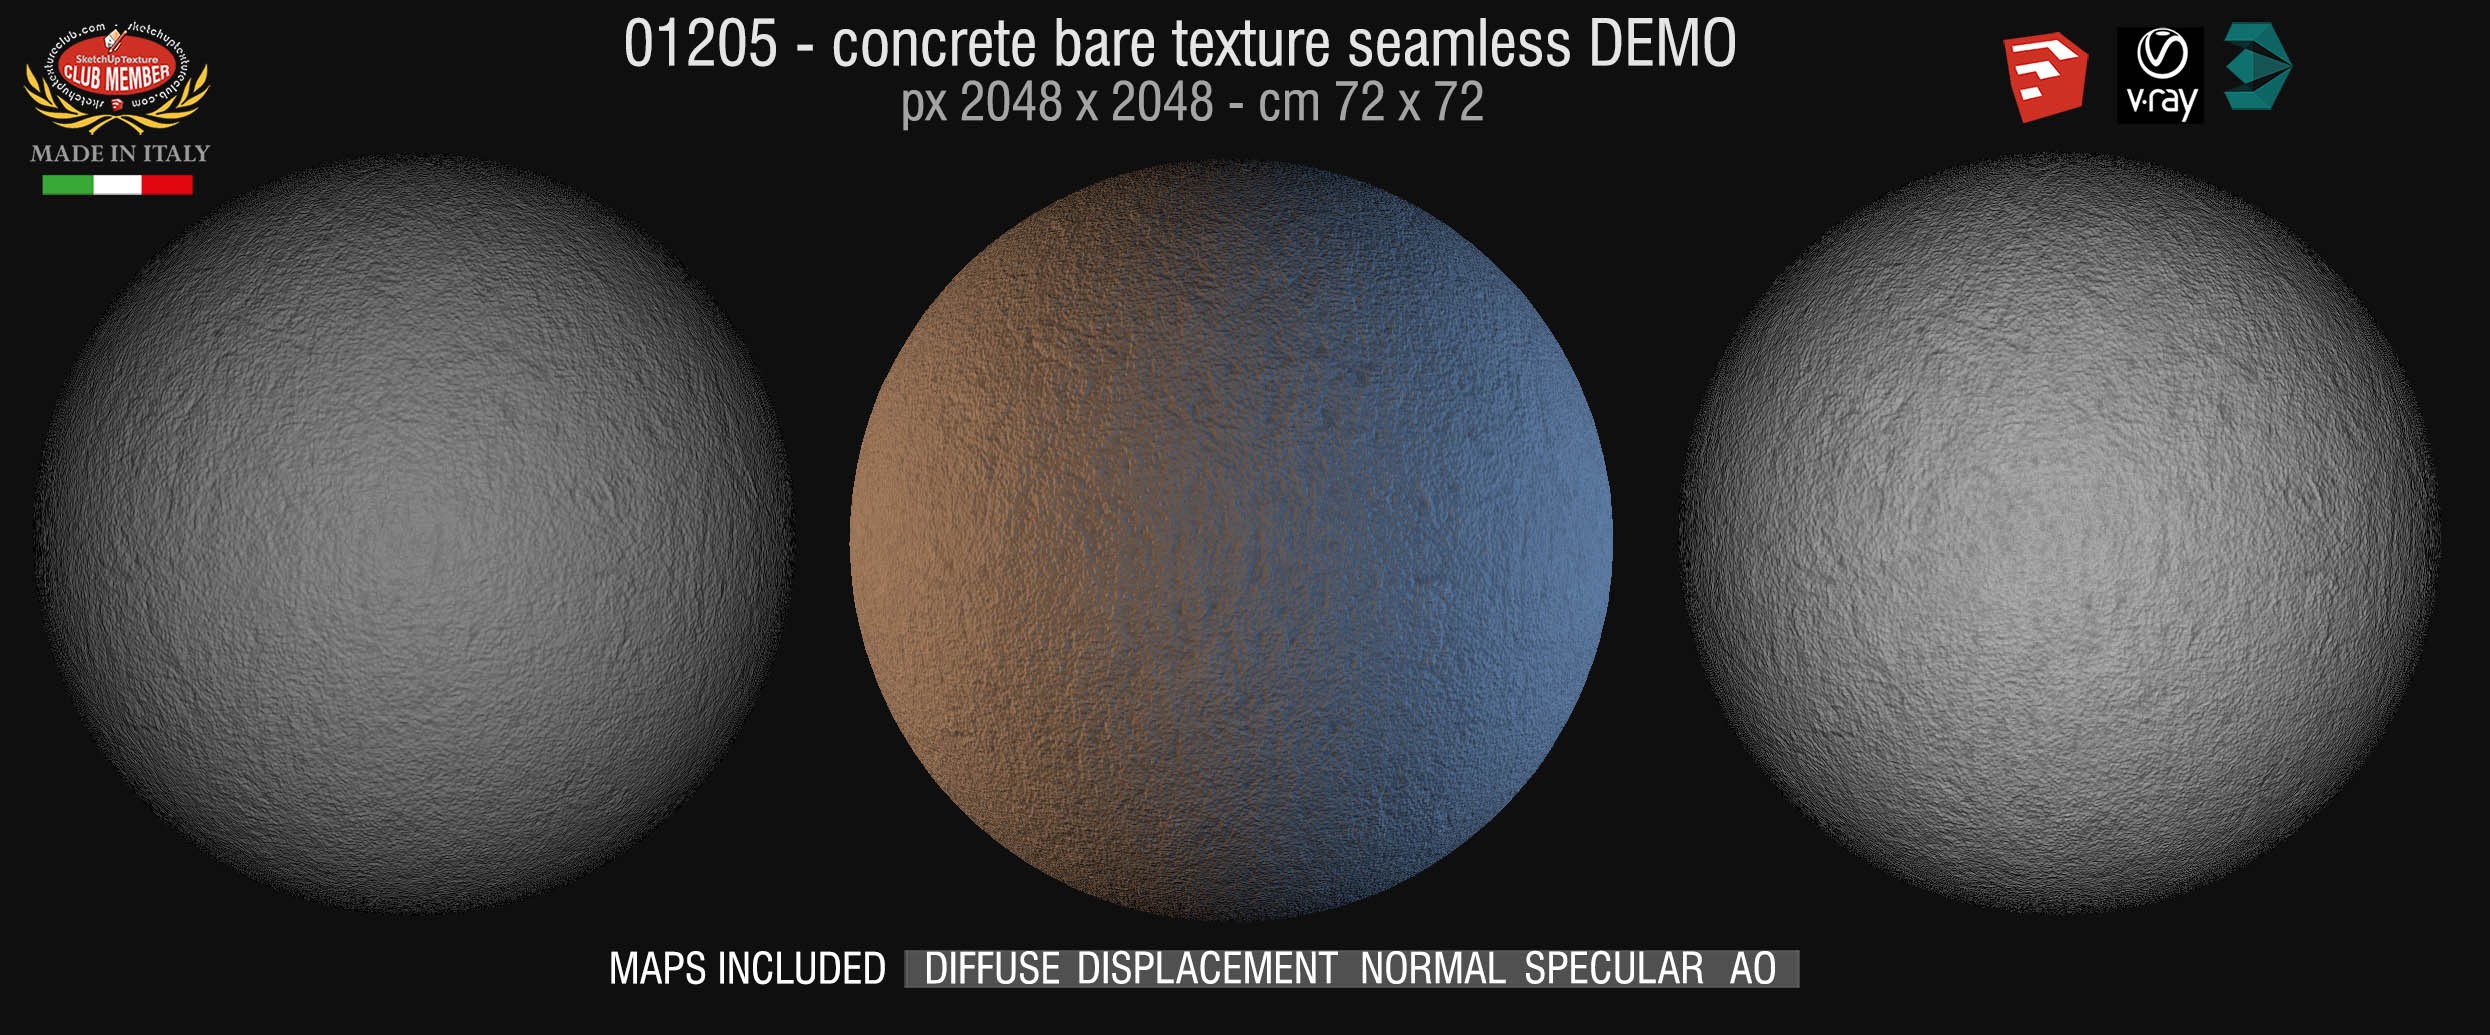 01205 HR Concrete bare clean texture + maps DEMO